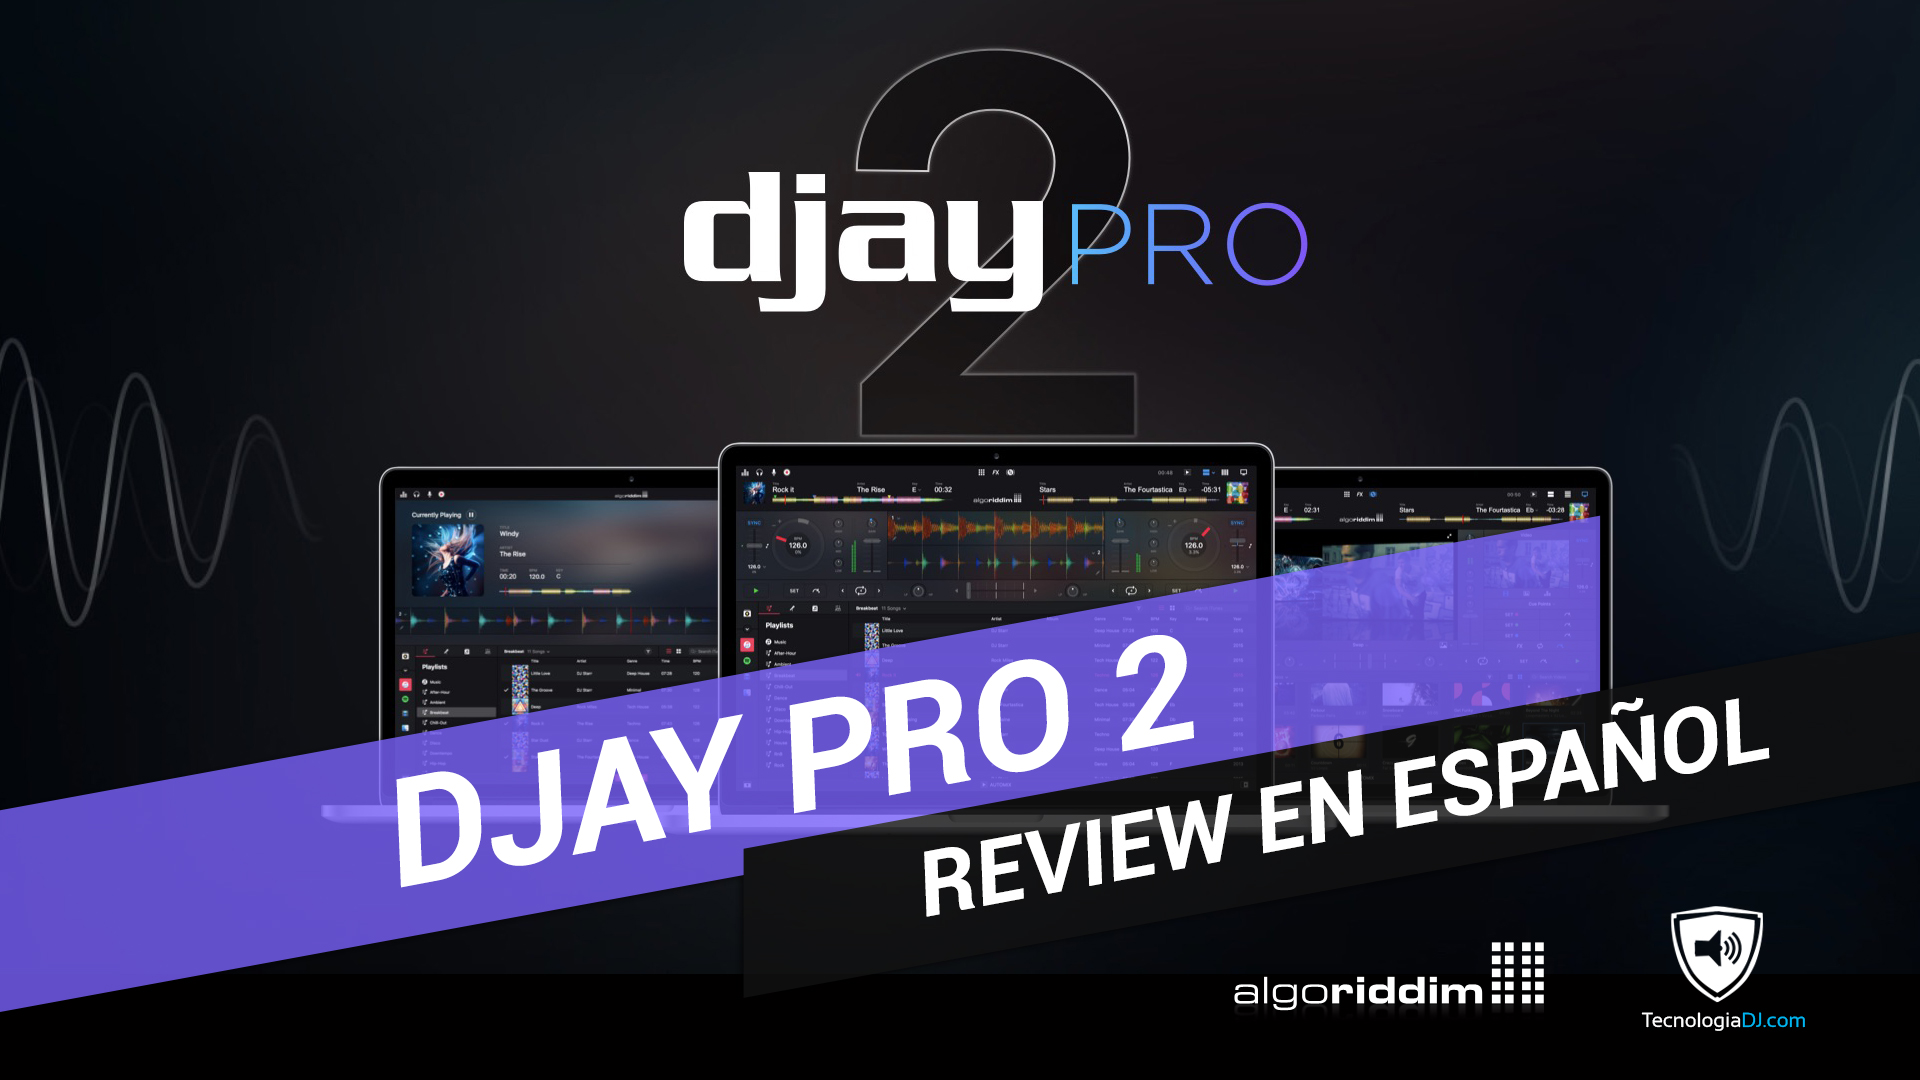 Review en español de djay Pro 2 de Algoriddim